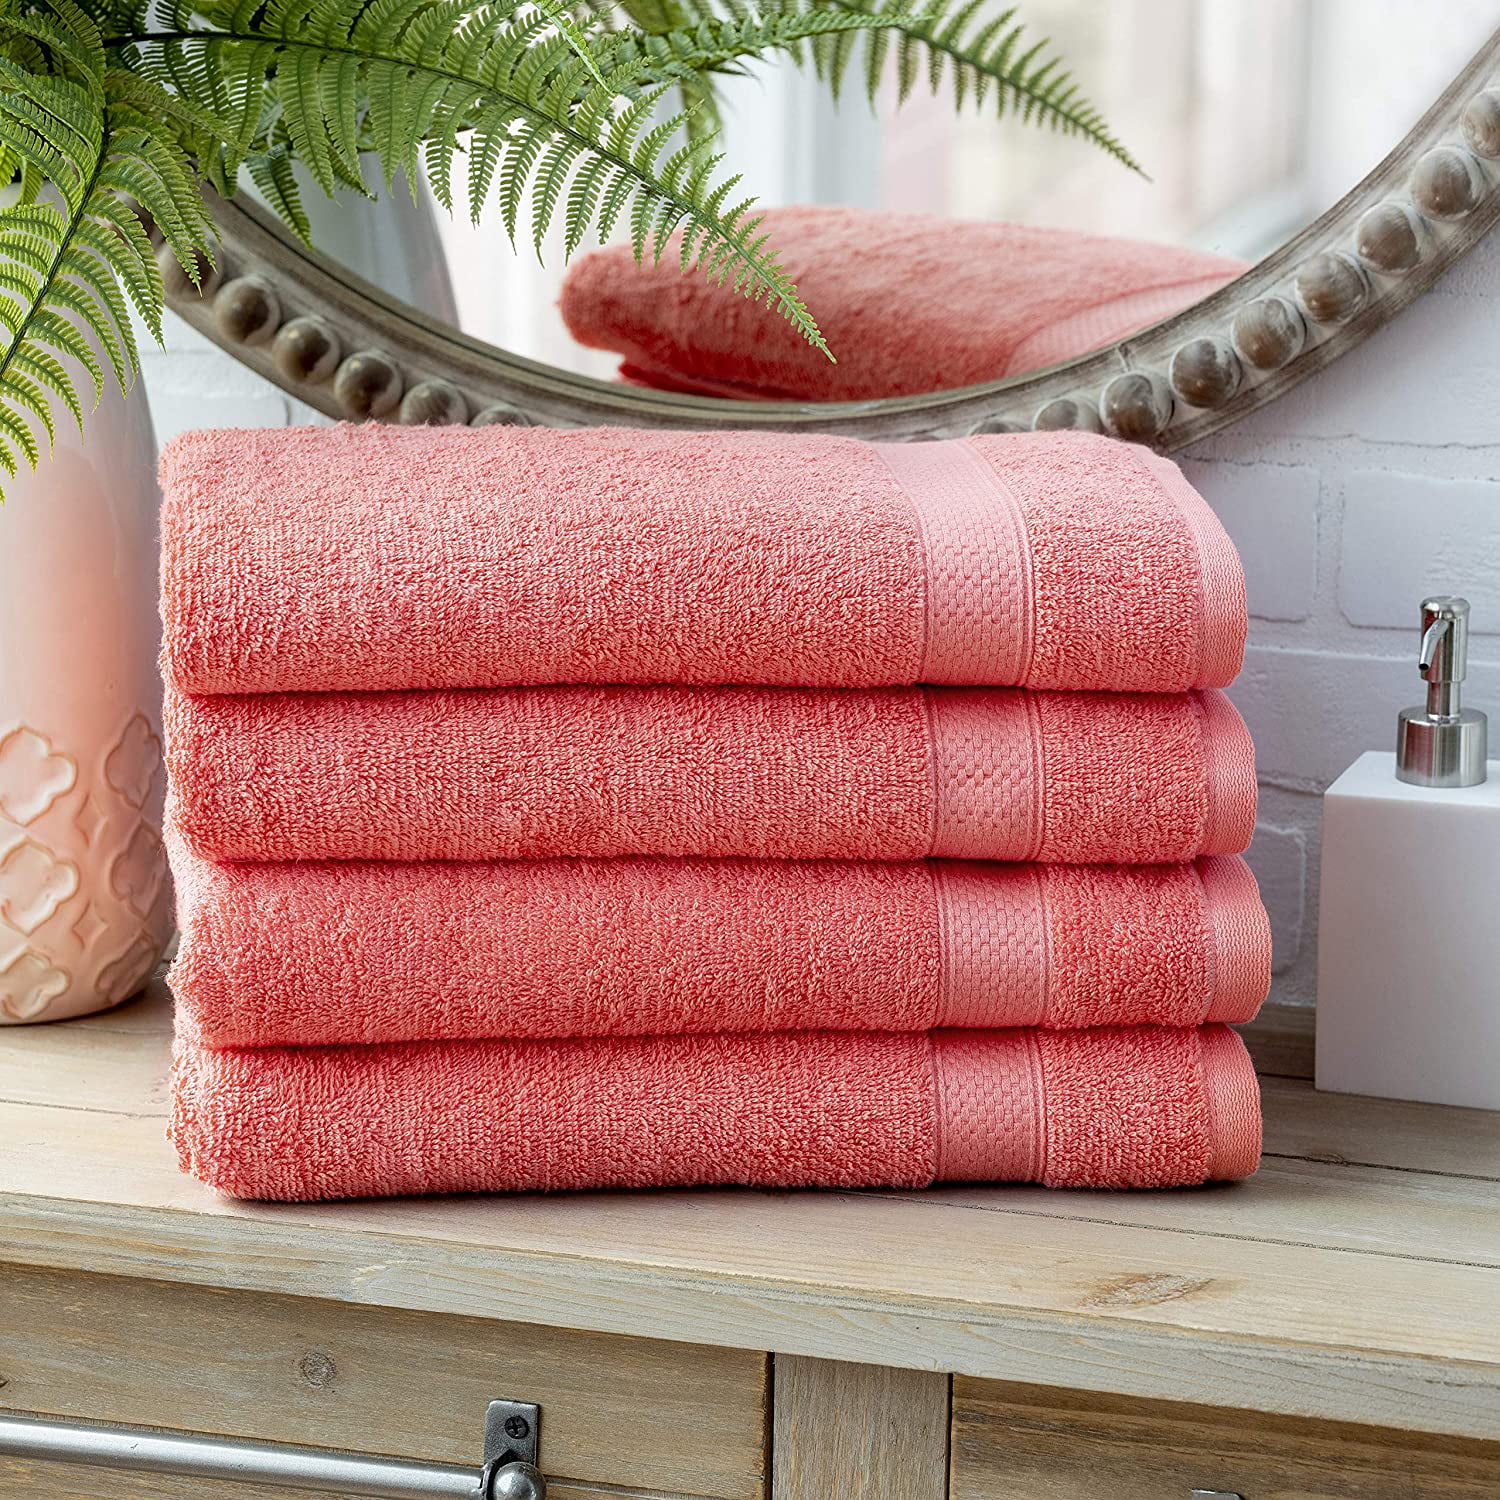 Absorbent Machine Washable - Set of 4 Bath Towels Soft Welhome Basic 100% Cotton Towel Quick Dry Sky Blue 434 GSM